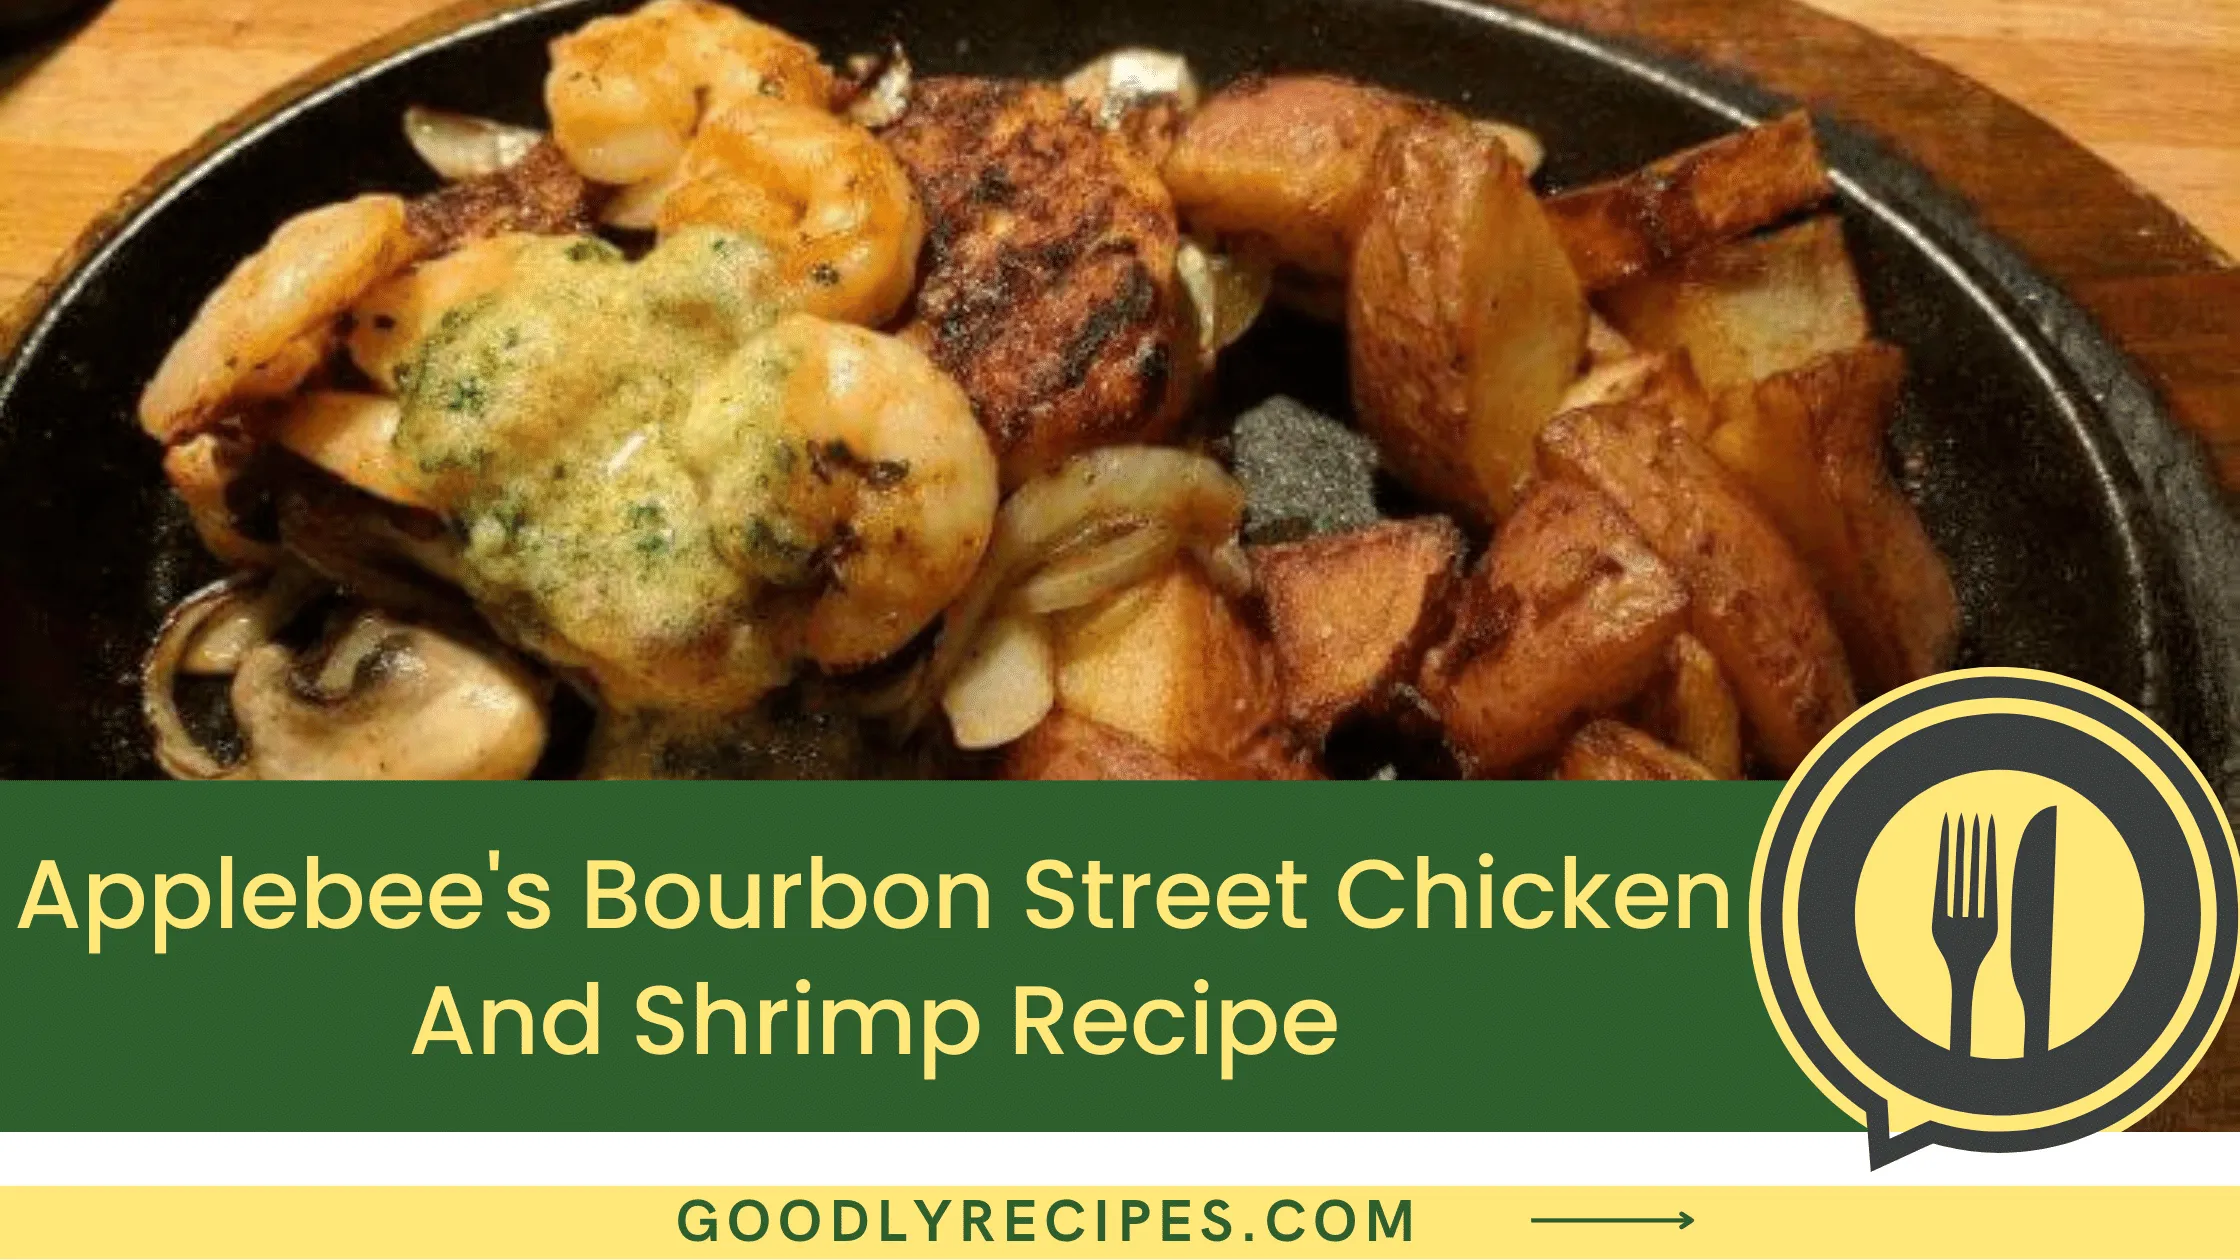 What is Applebee’s Bourbon Street Chicken And Shrimp?